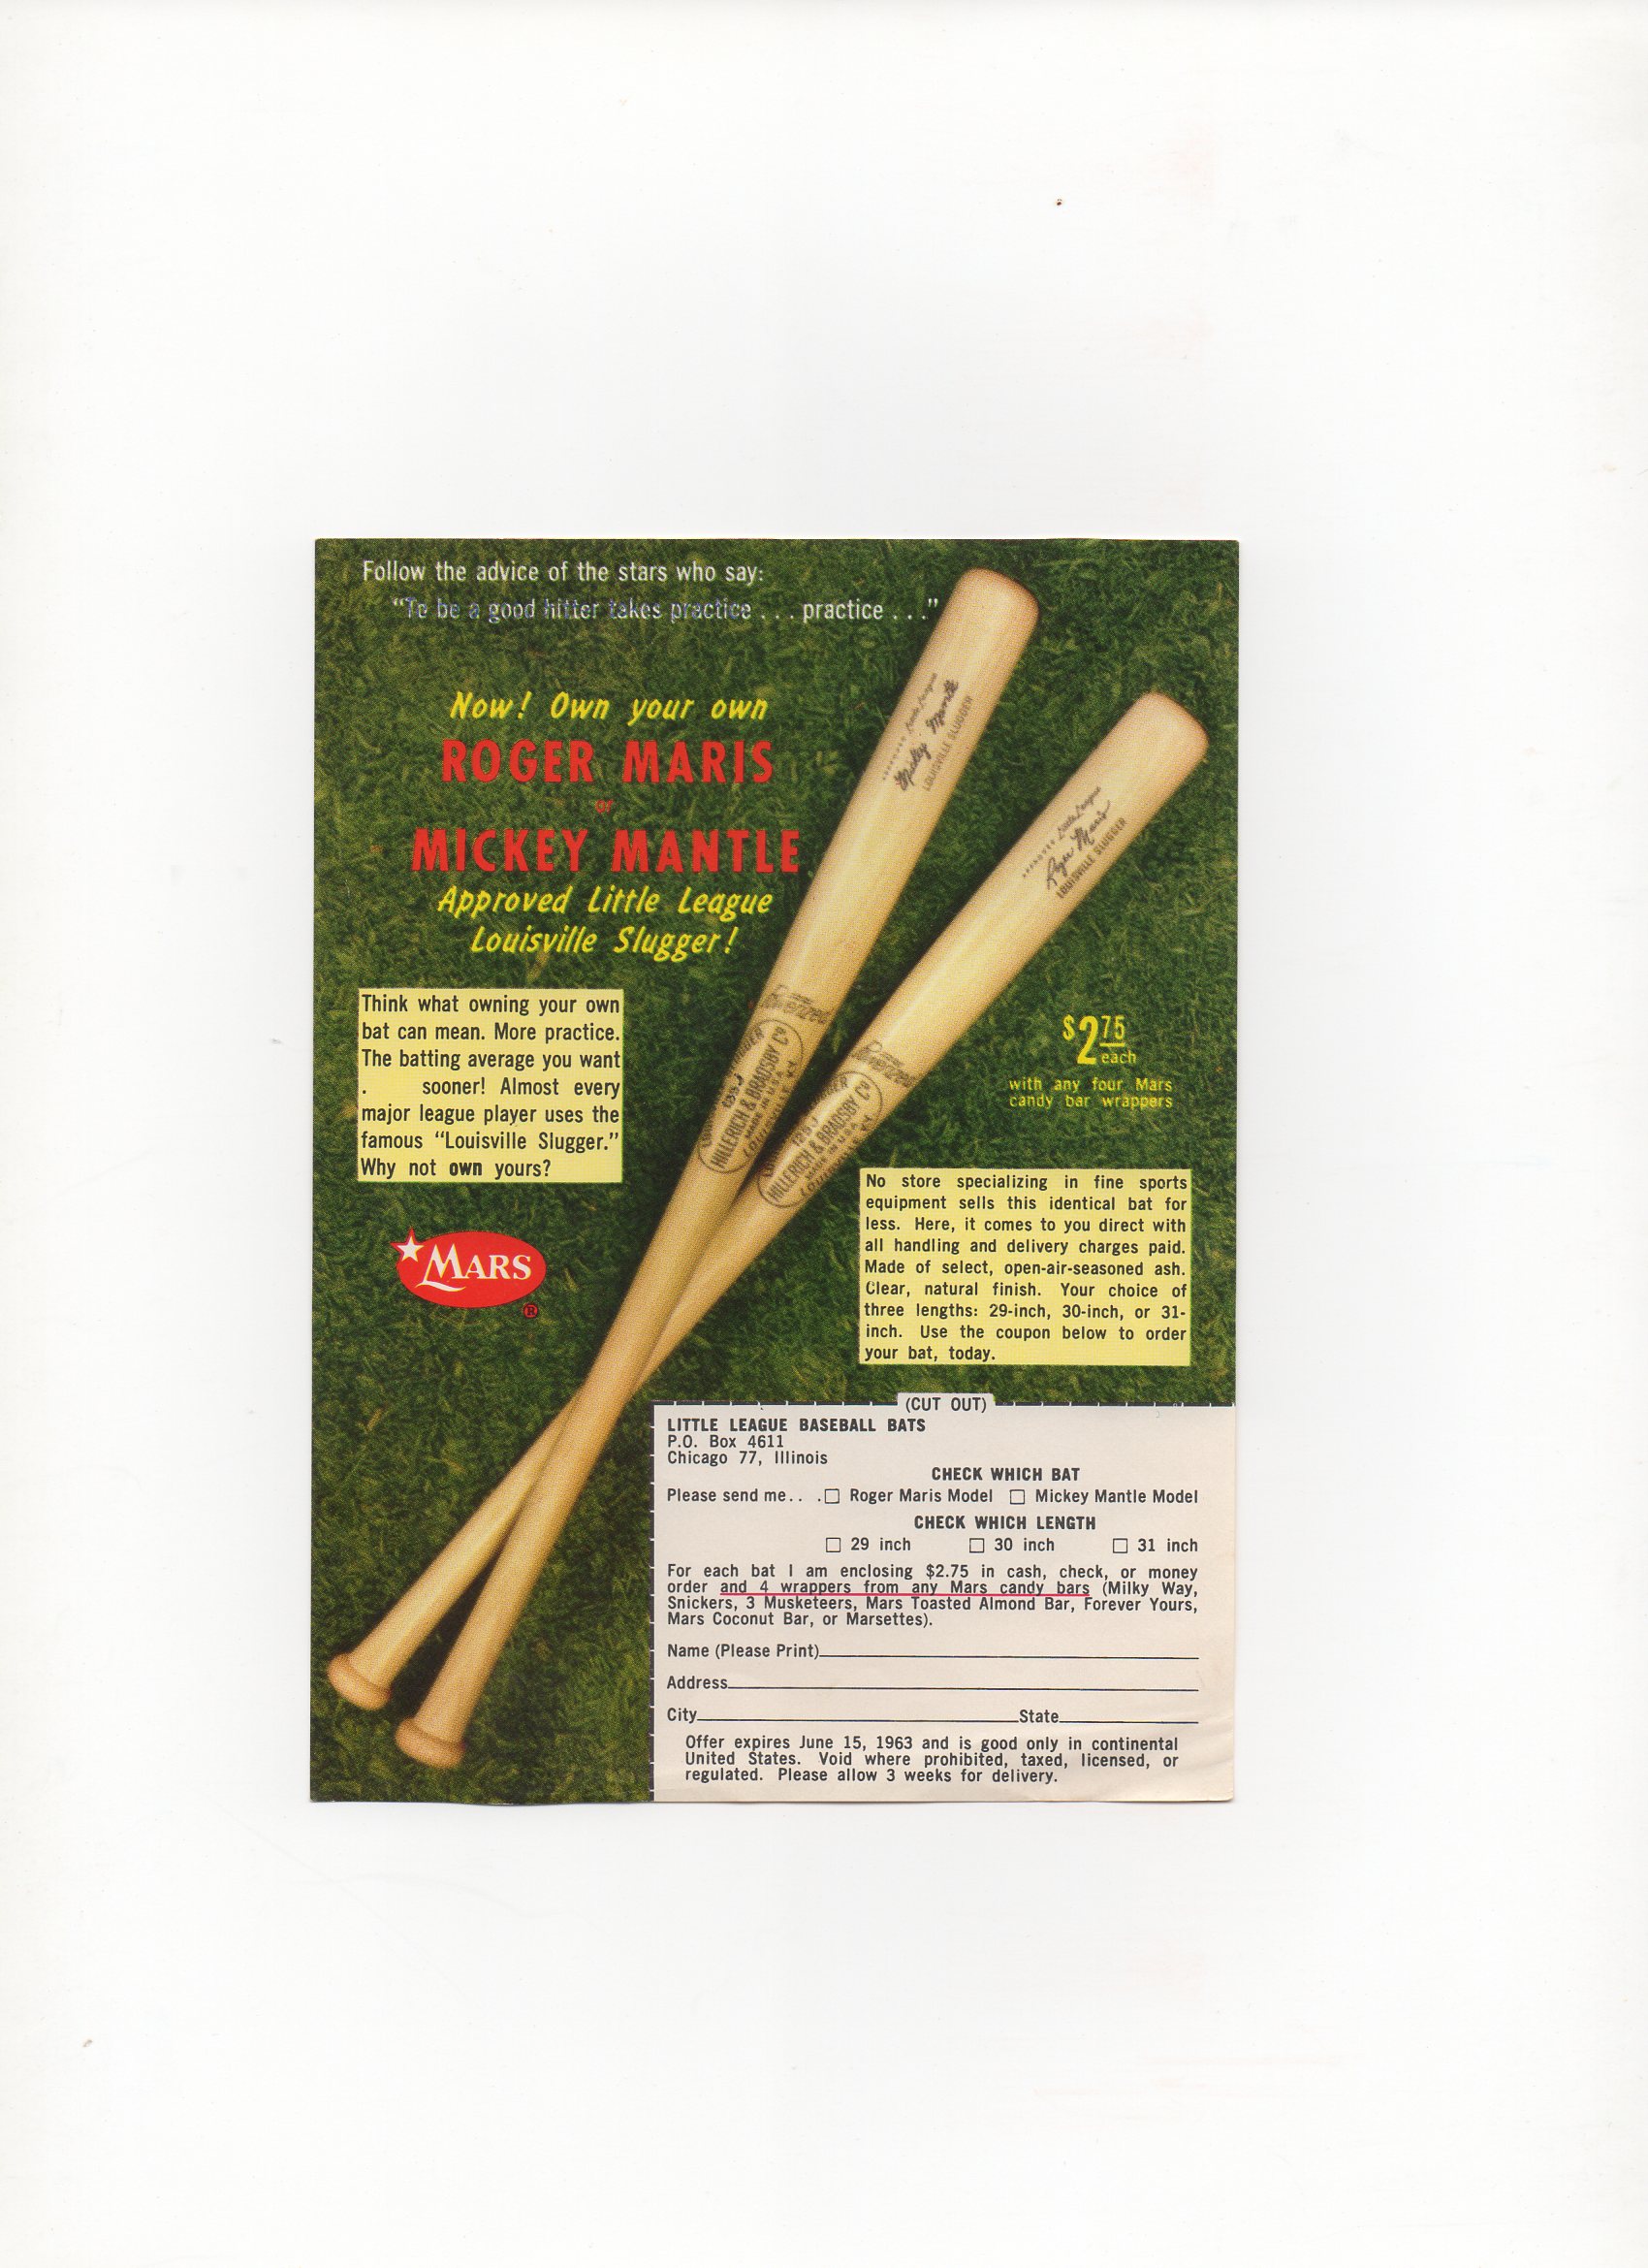 1962 sonic arts baseball tips, small flyer